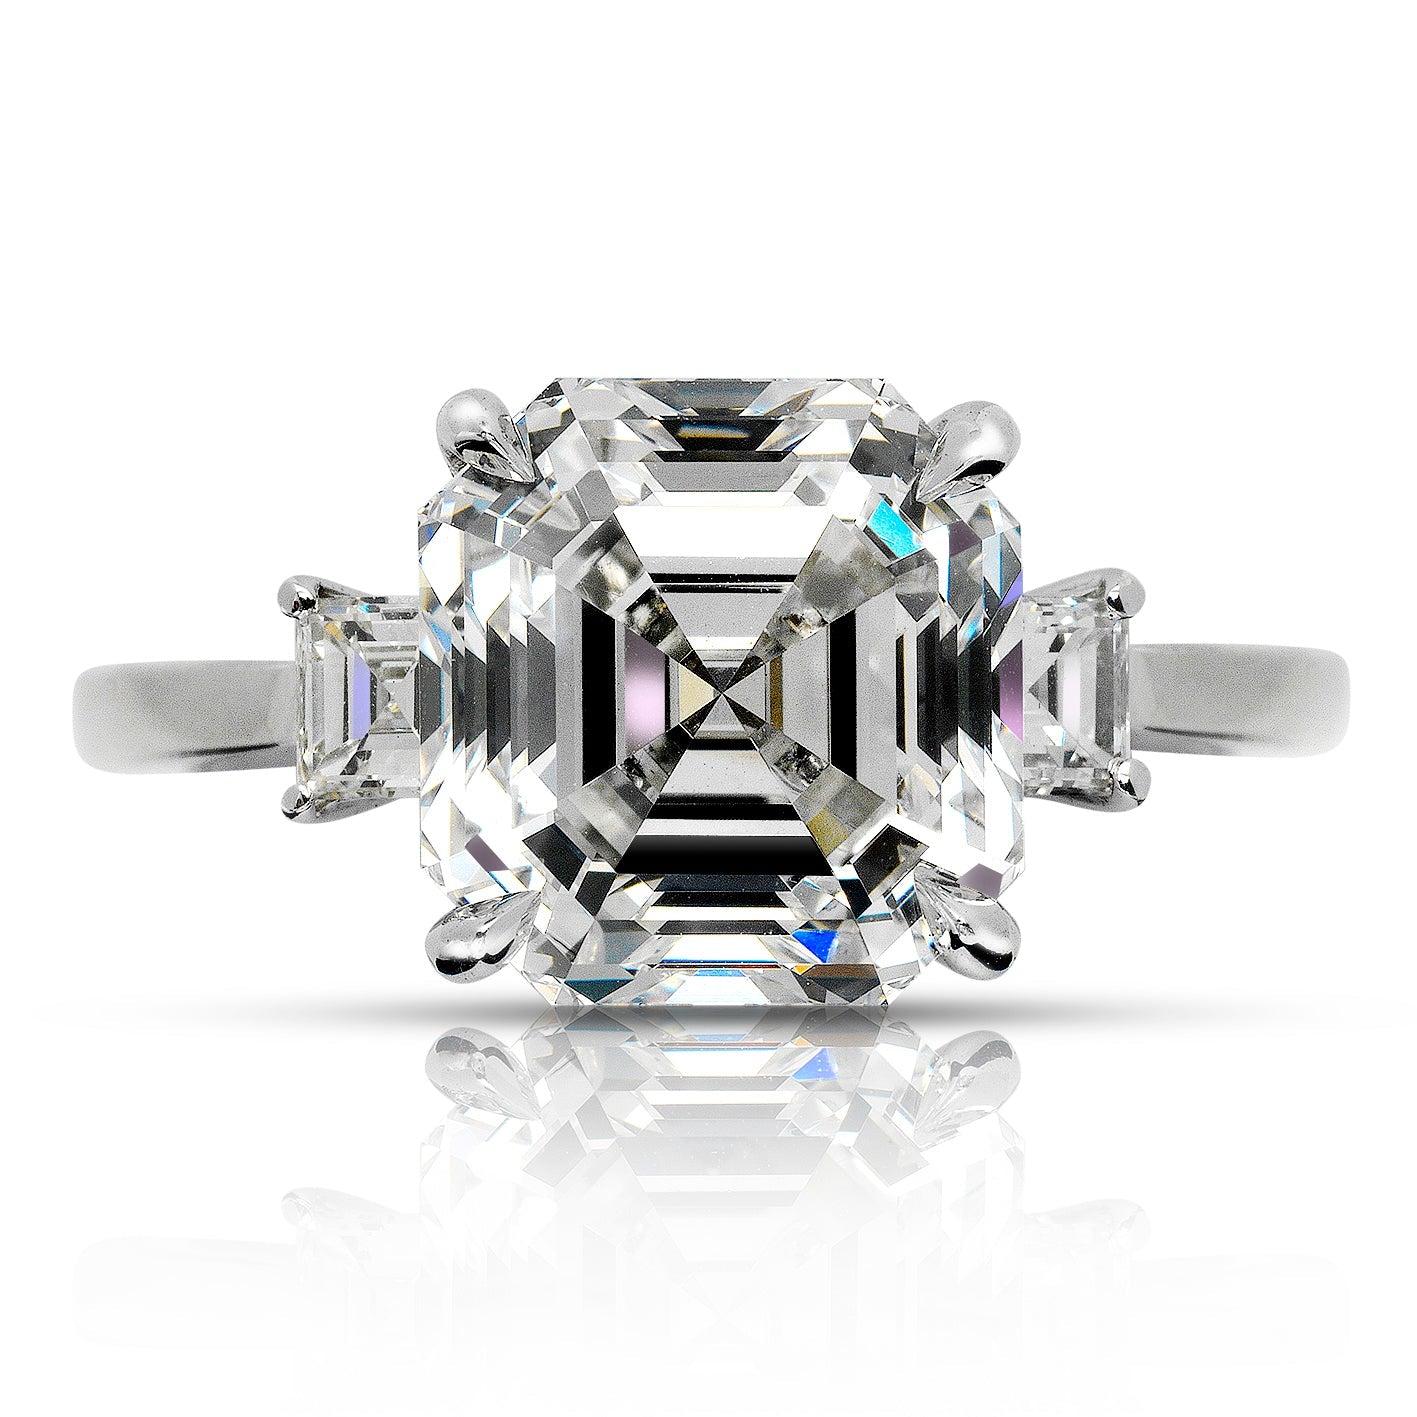 MAVIA -ASSCHER THREE  STONE DIAMOND ENGAGEMENT RING BY MIKE NEKTA
GIA CERTIFIED


Center Diamond:
Carat Weight: 5 Carats
Color : E
Clarity: VVS1
Style: ASSCHER CUT / SQUARE EMERALD CUT
Approximate Measurements: 9.6 x 9.2 x 6.5 mm
 
Ring:
Metal: 18K